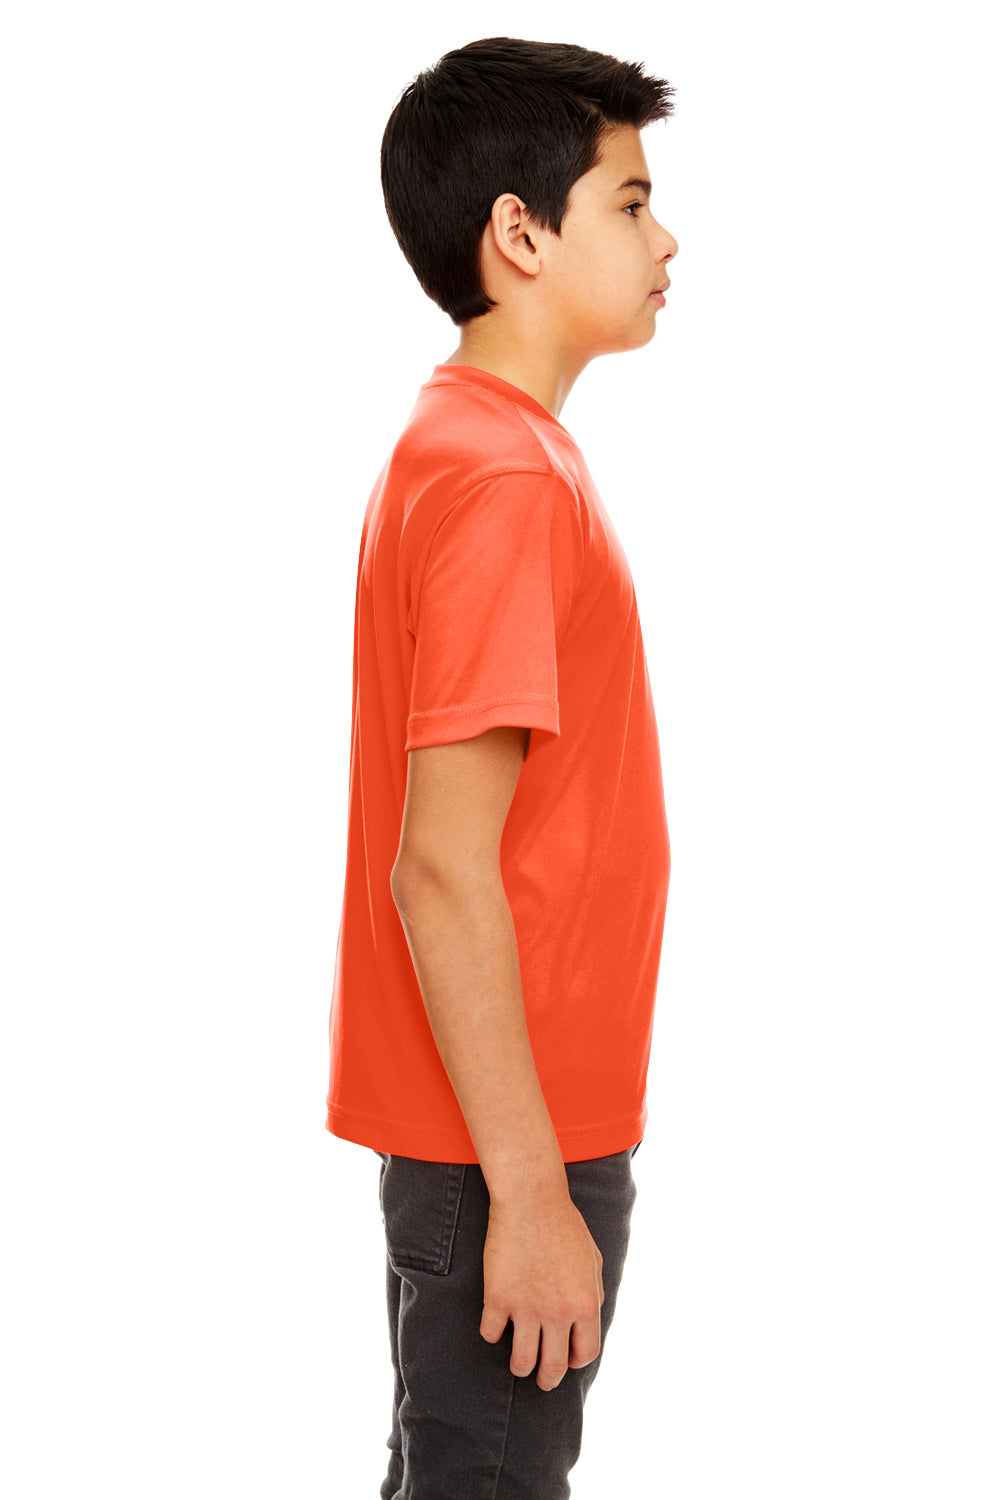 UltraClub 8420Y Youth Cool & Dry Performance Moisture Wicking Short Sleeve Crewneck T-Shirt Orange Side